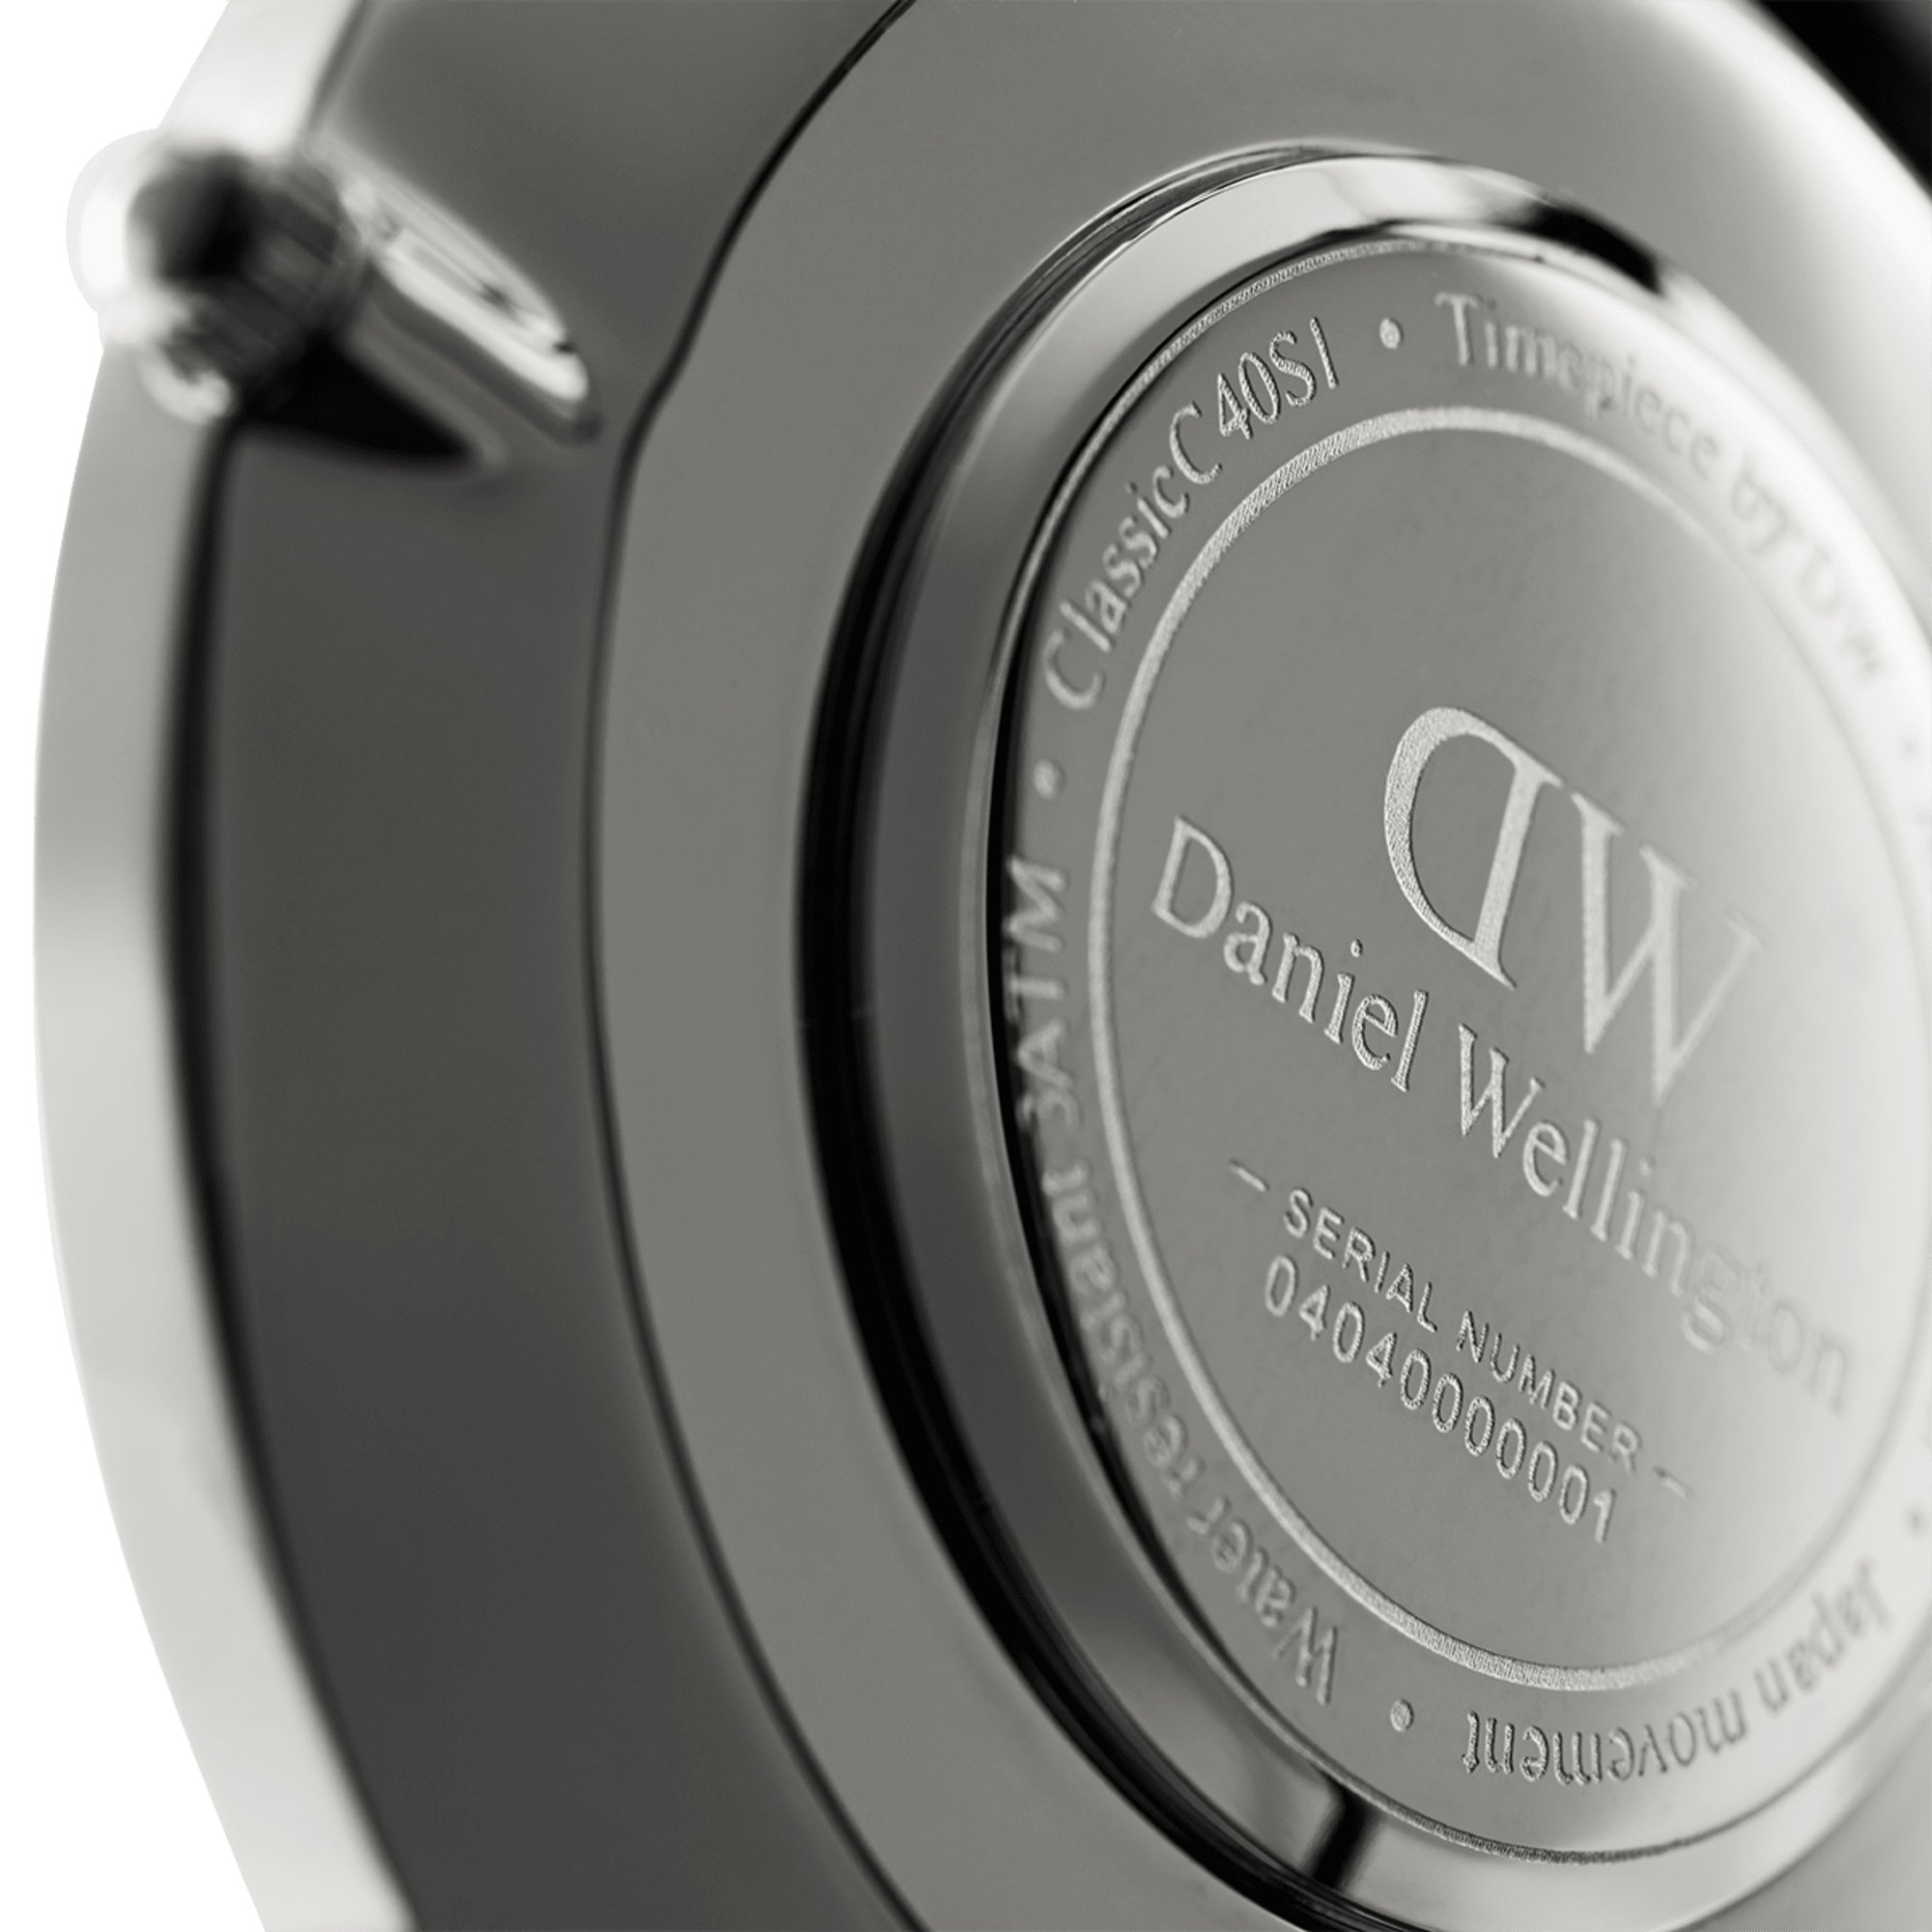 Daniel Wellington Classic 40 St Mawes Silver & White Watch